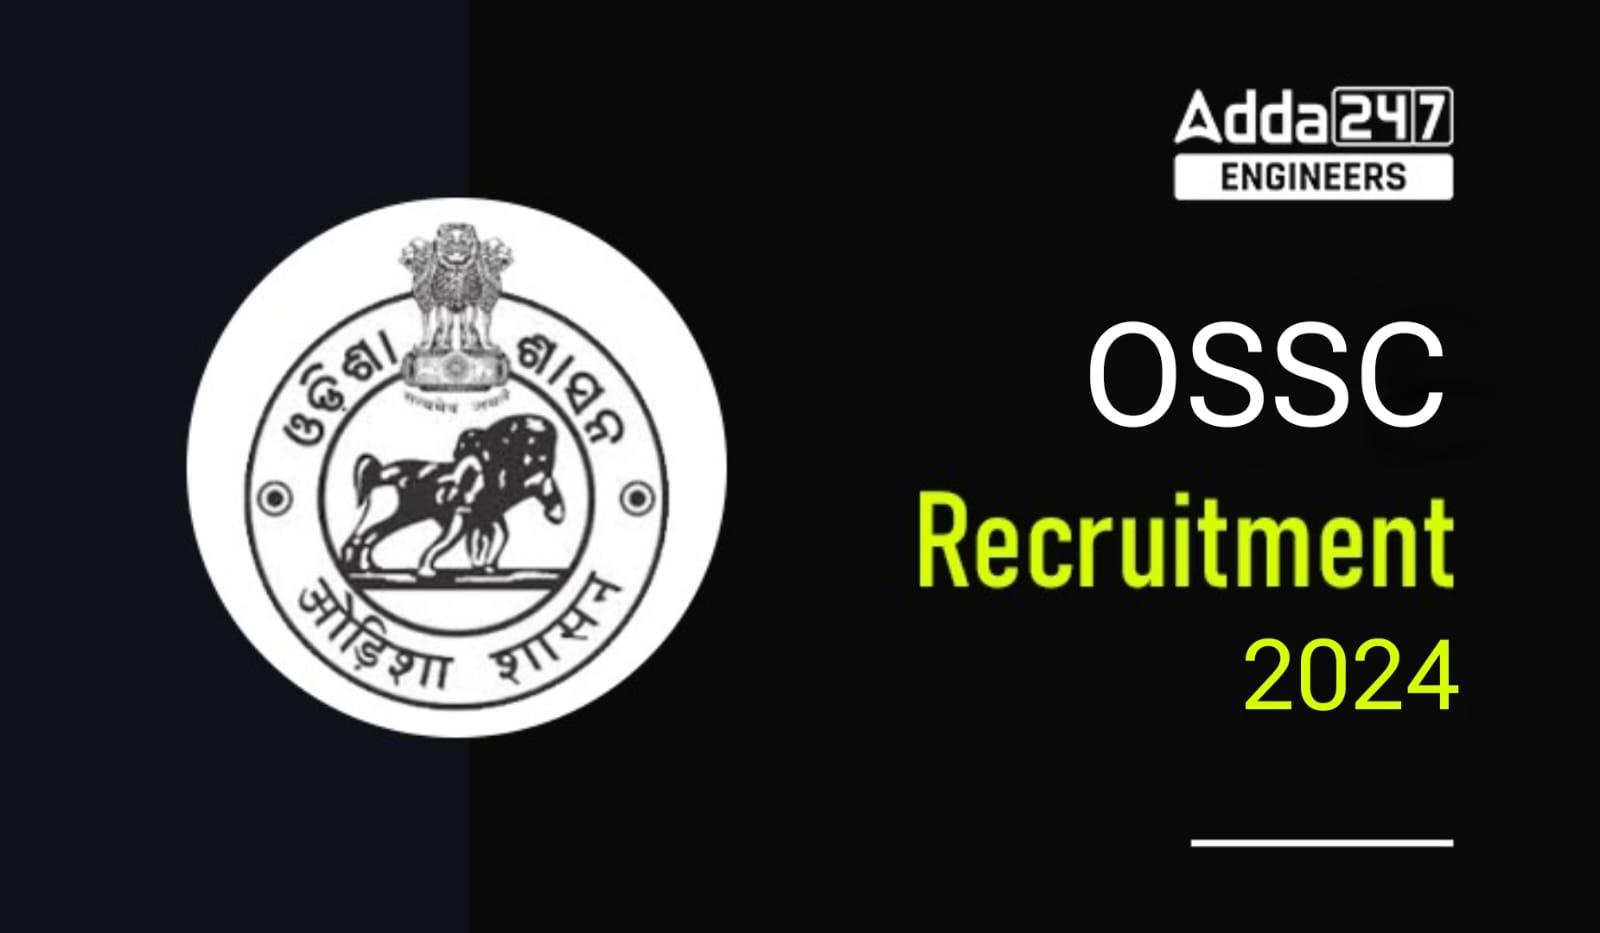 OSSC ATO Recruitment 2024